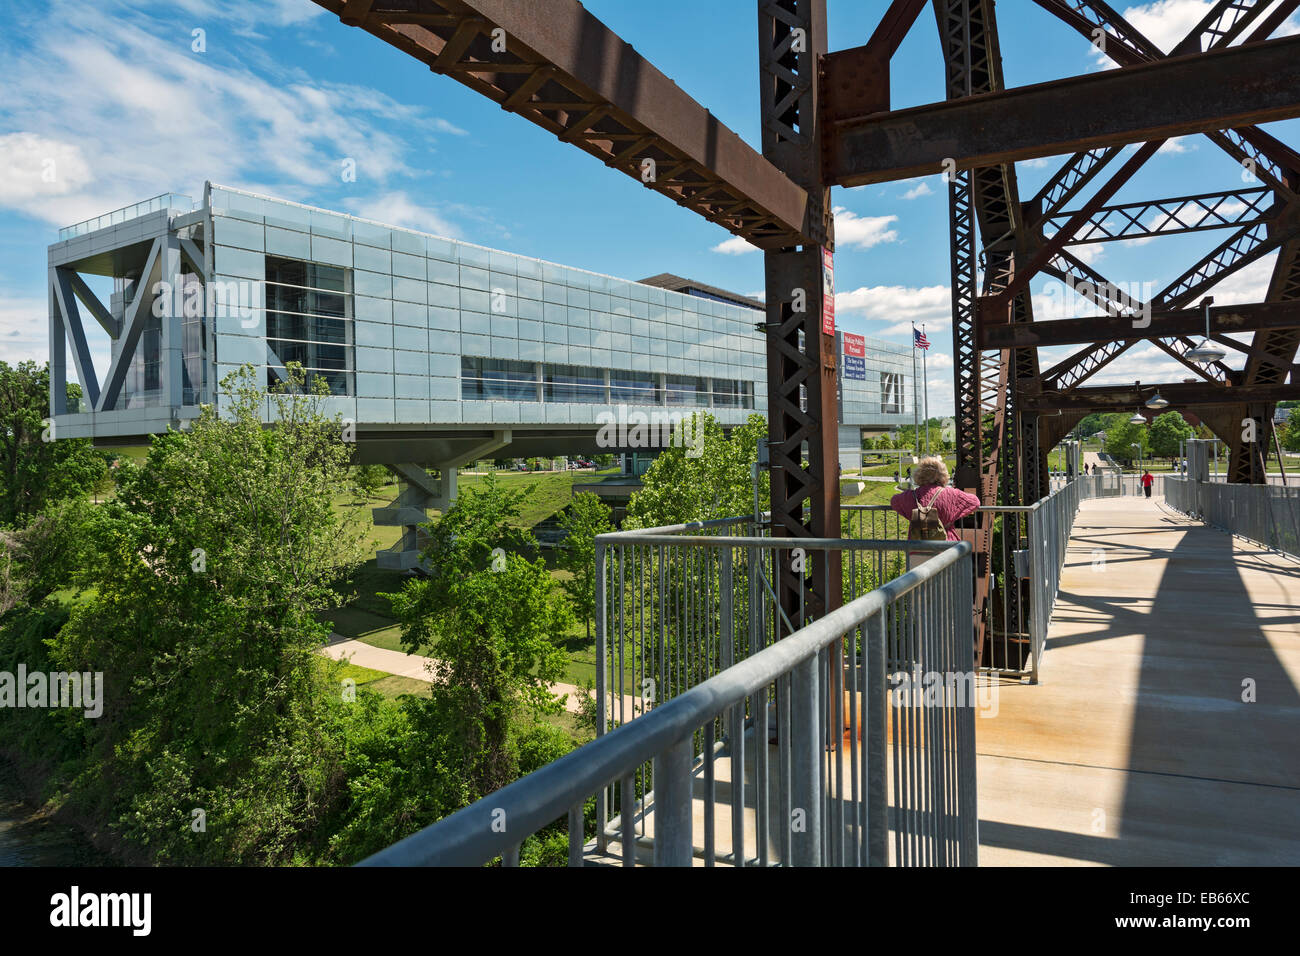 Little Rock, Arkansas, Schienen, Wanderwege, William J. Clinton Presidential Library & Museum Brücke über Arkansas Fluß Stockfoto